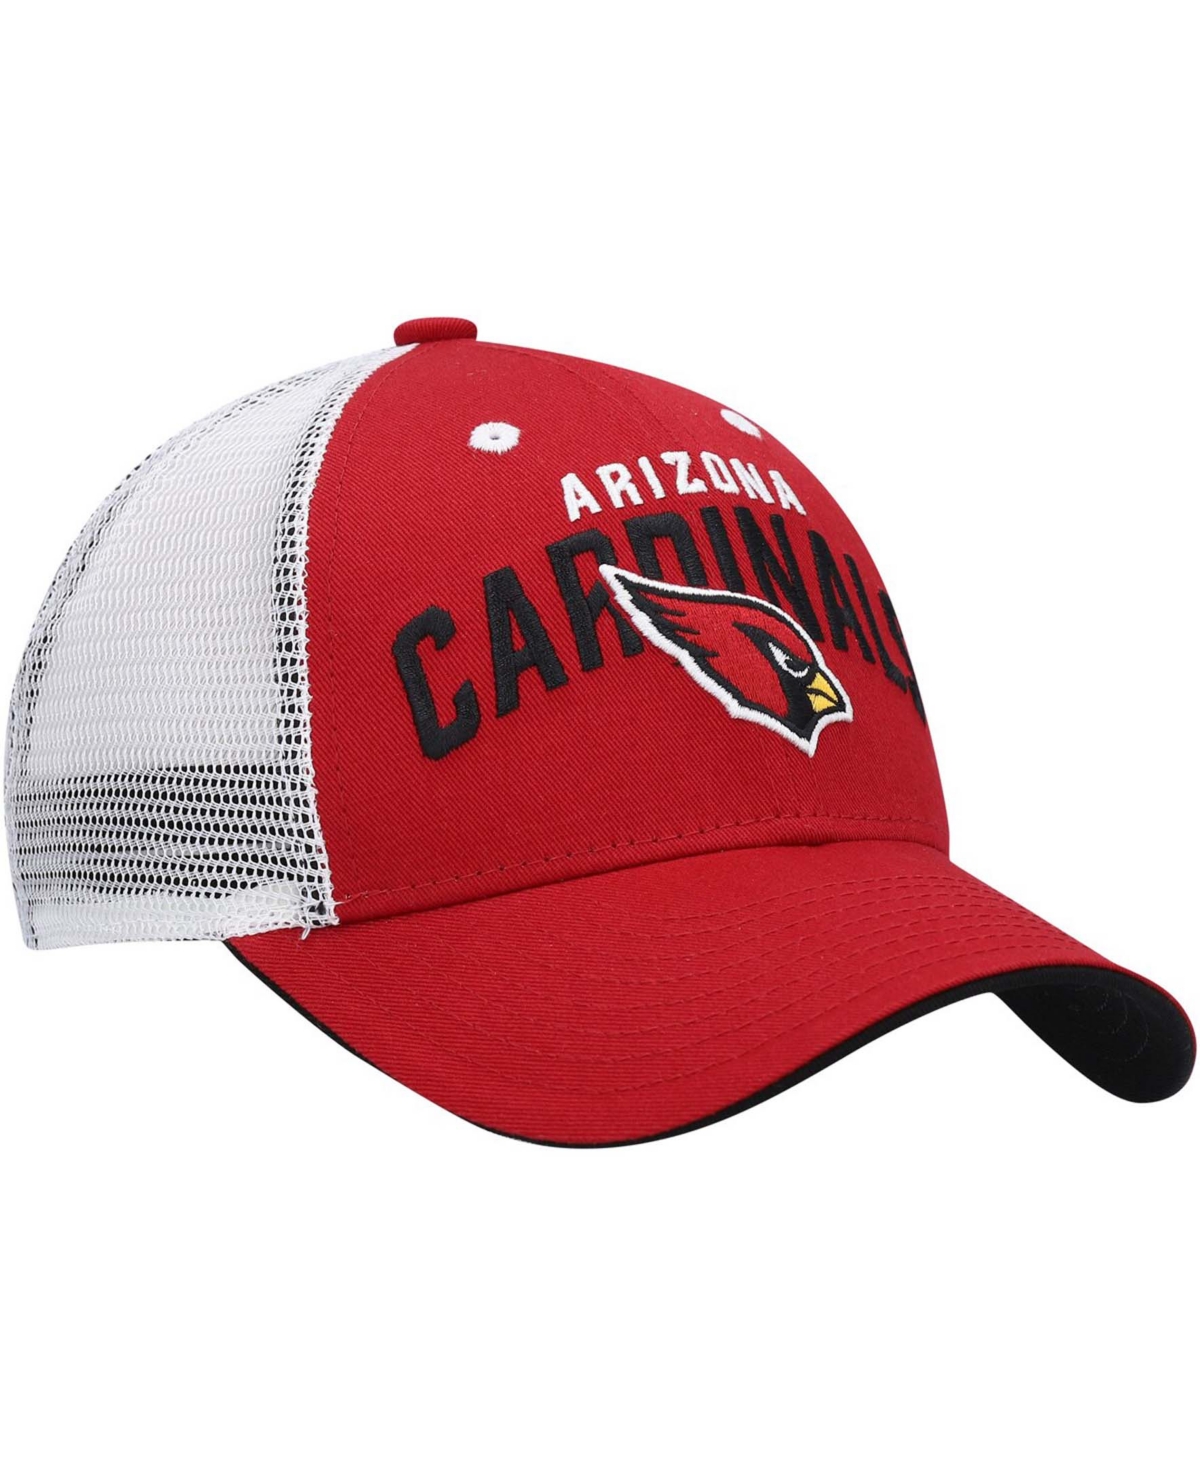 Shop Outerstuff Big Boys And Girls Cardinal, White Arizona Cardinals Core Lockup Snapback Hat